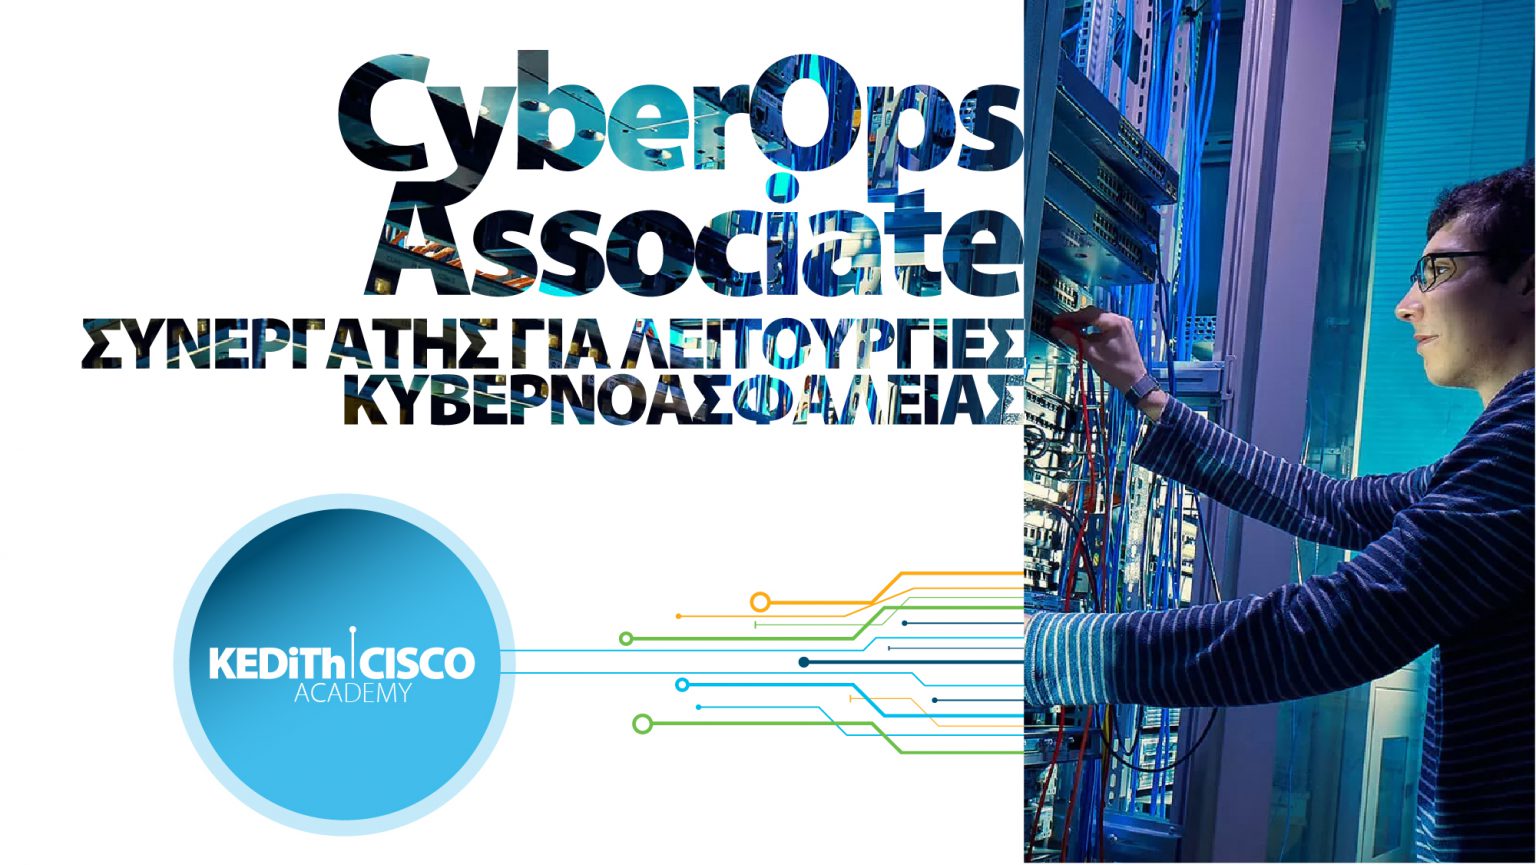 Cisco Cyber Security 2